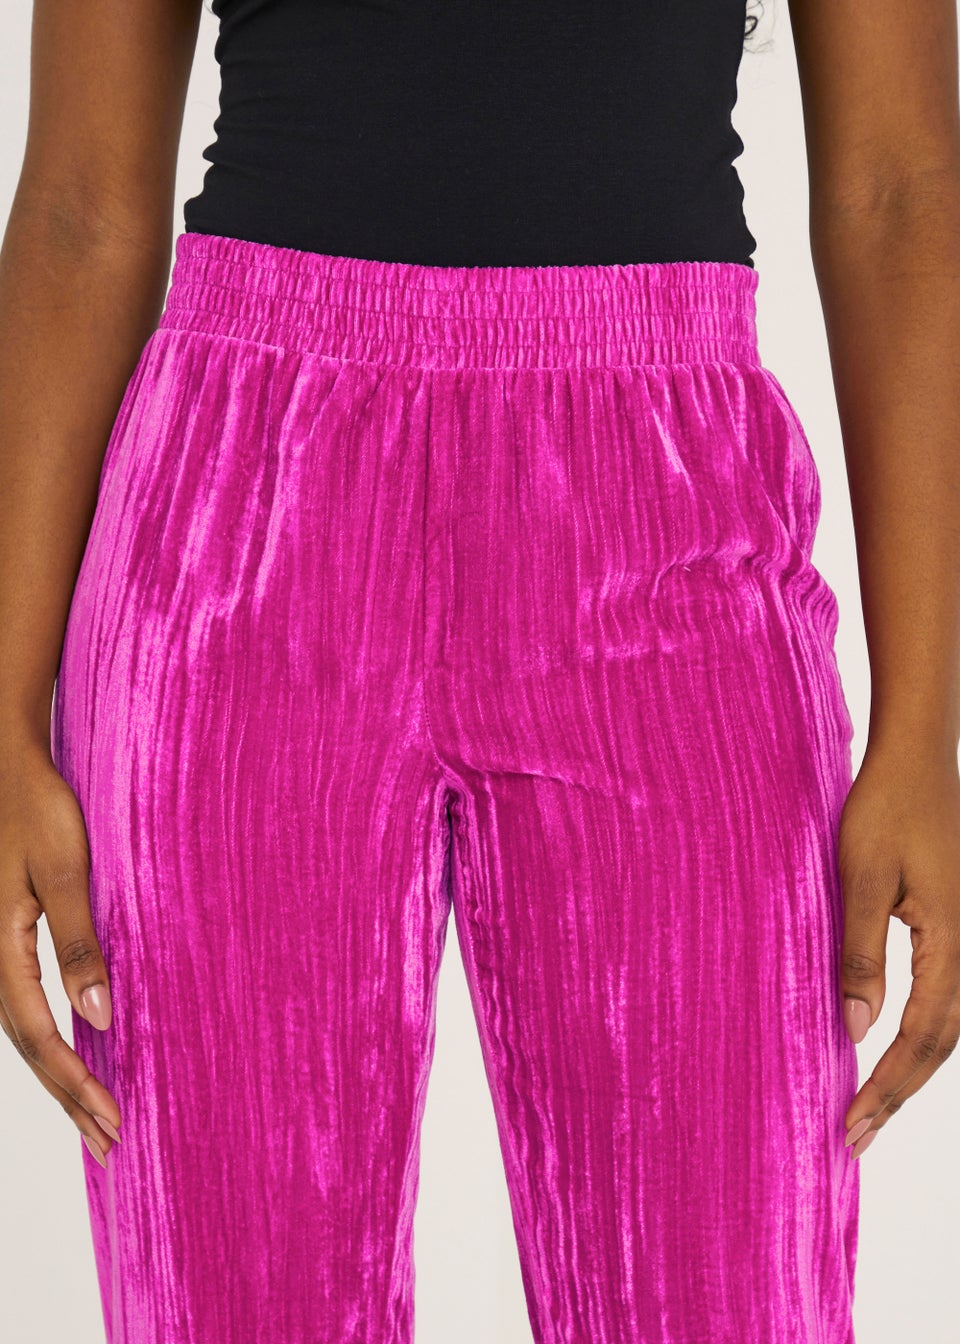 Topshop crushed velvet trouser in pink  ASOS